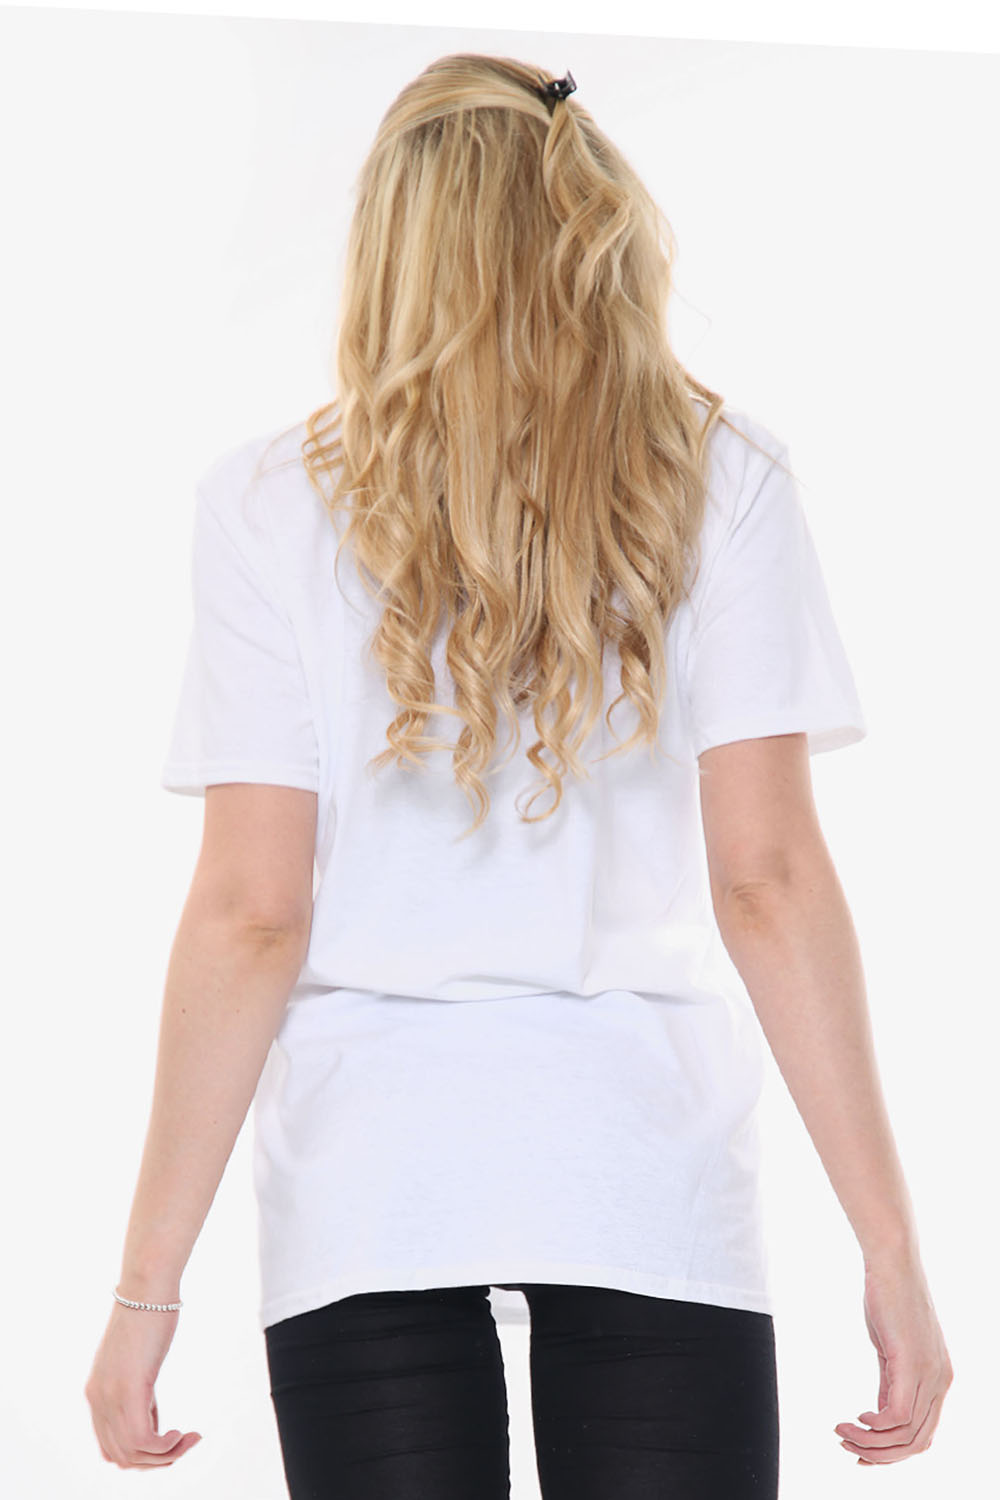 Softstyle Plain T-Shirt in White (Custom Pack)